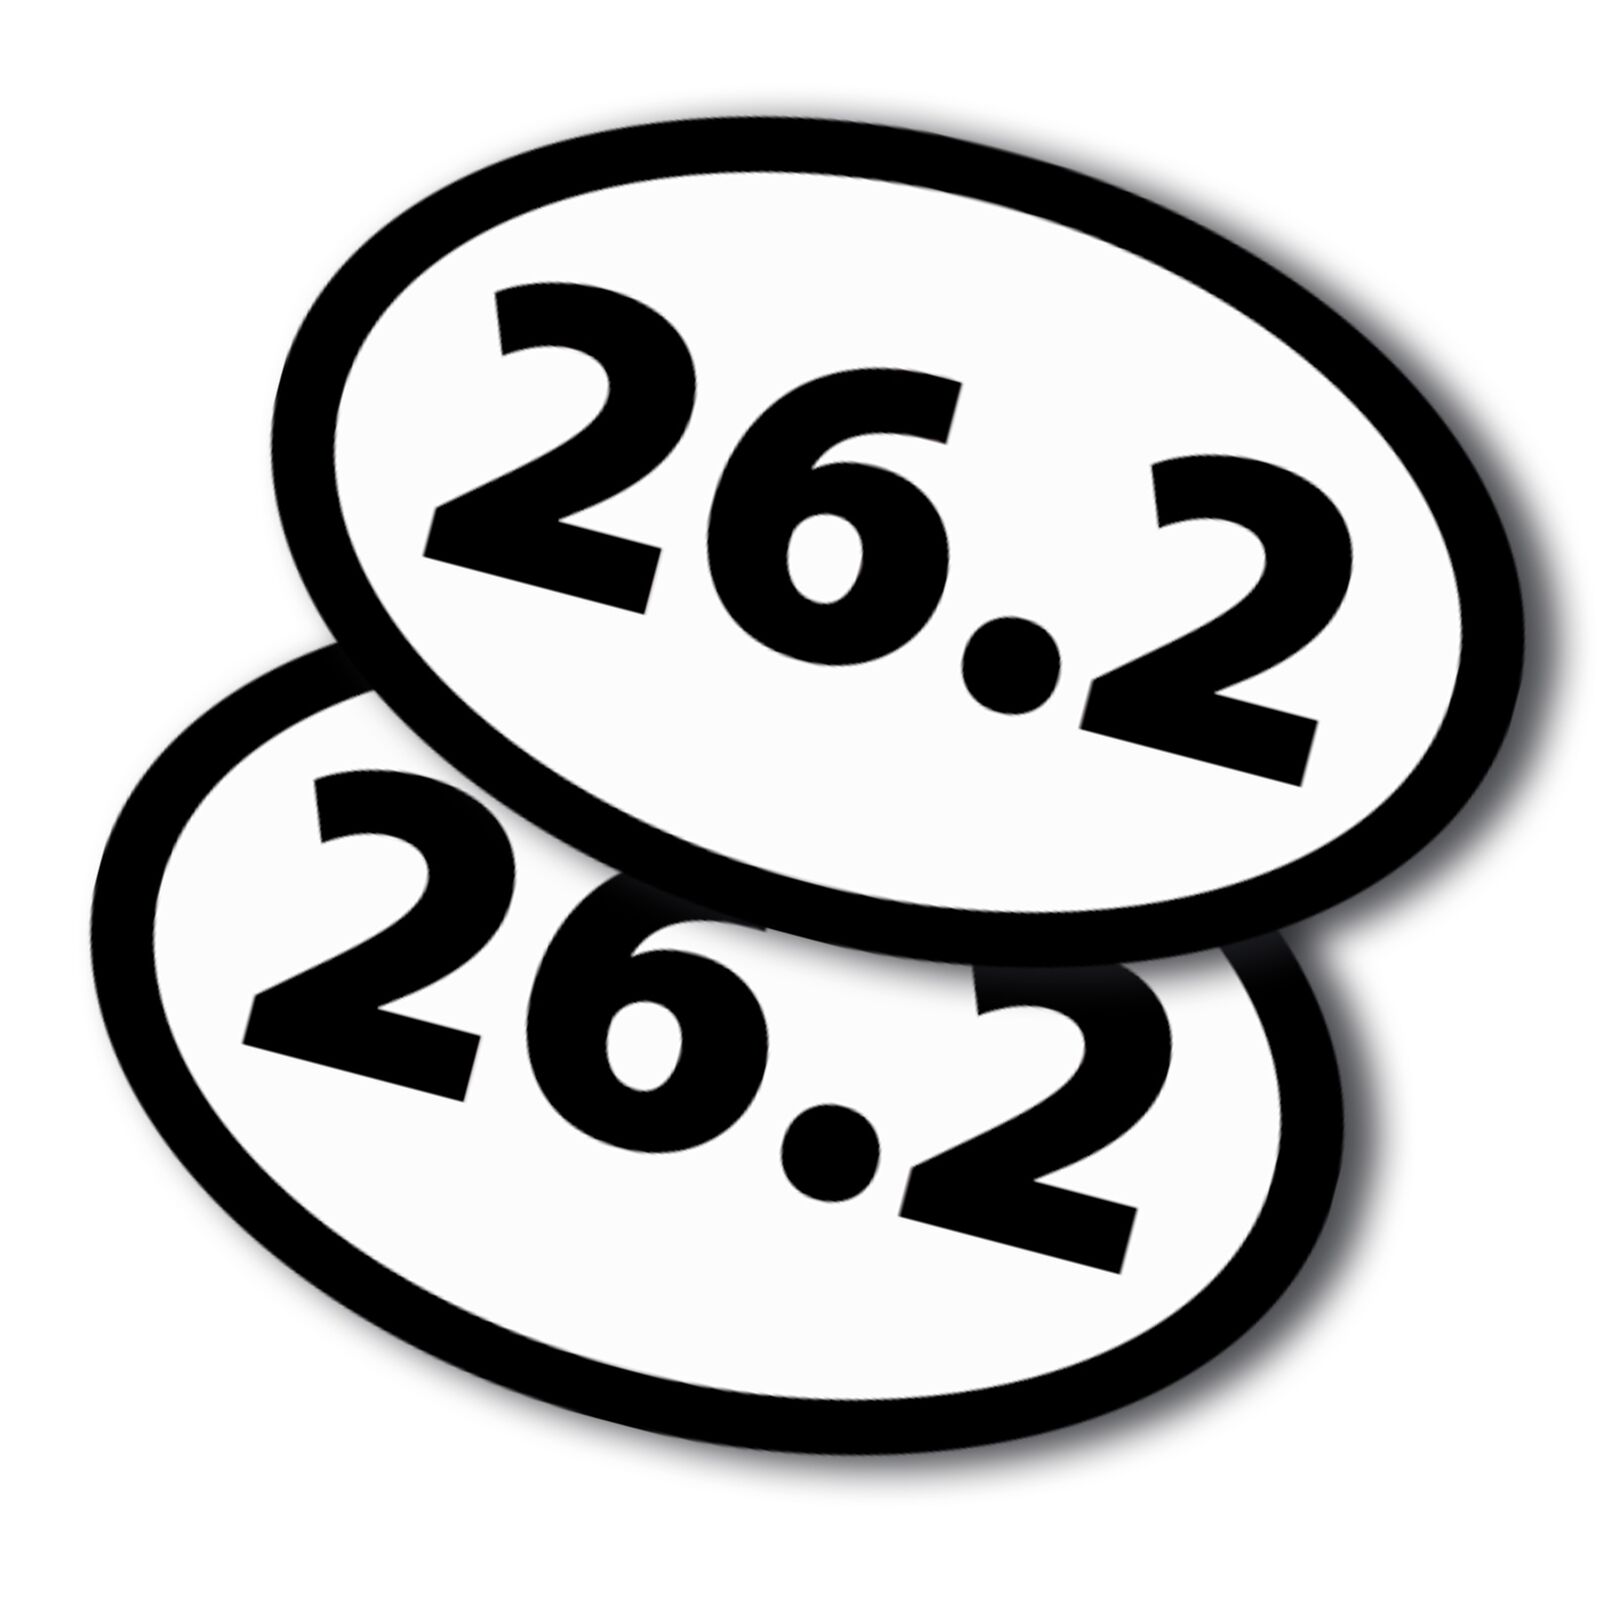 26.2 Marathon Black Oval Runner Adhesive Decal Sticker, 2 Pack, 5.5x3.5 Inch